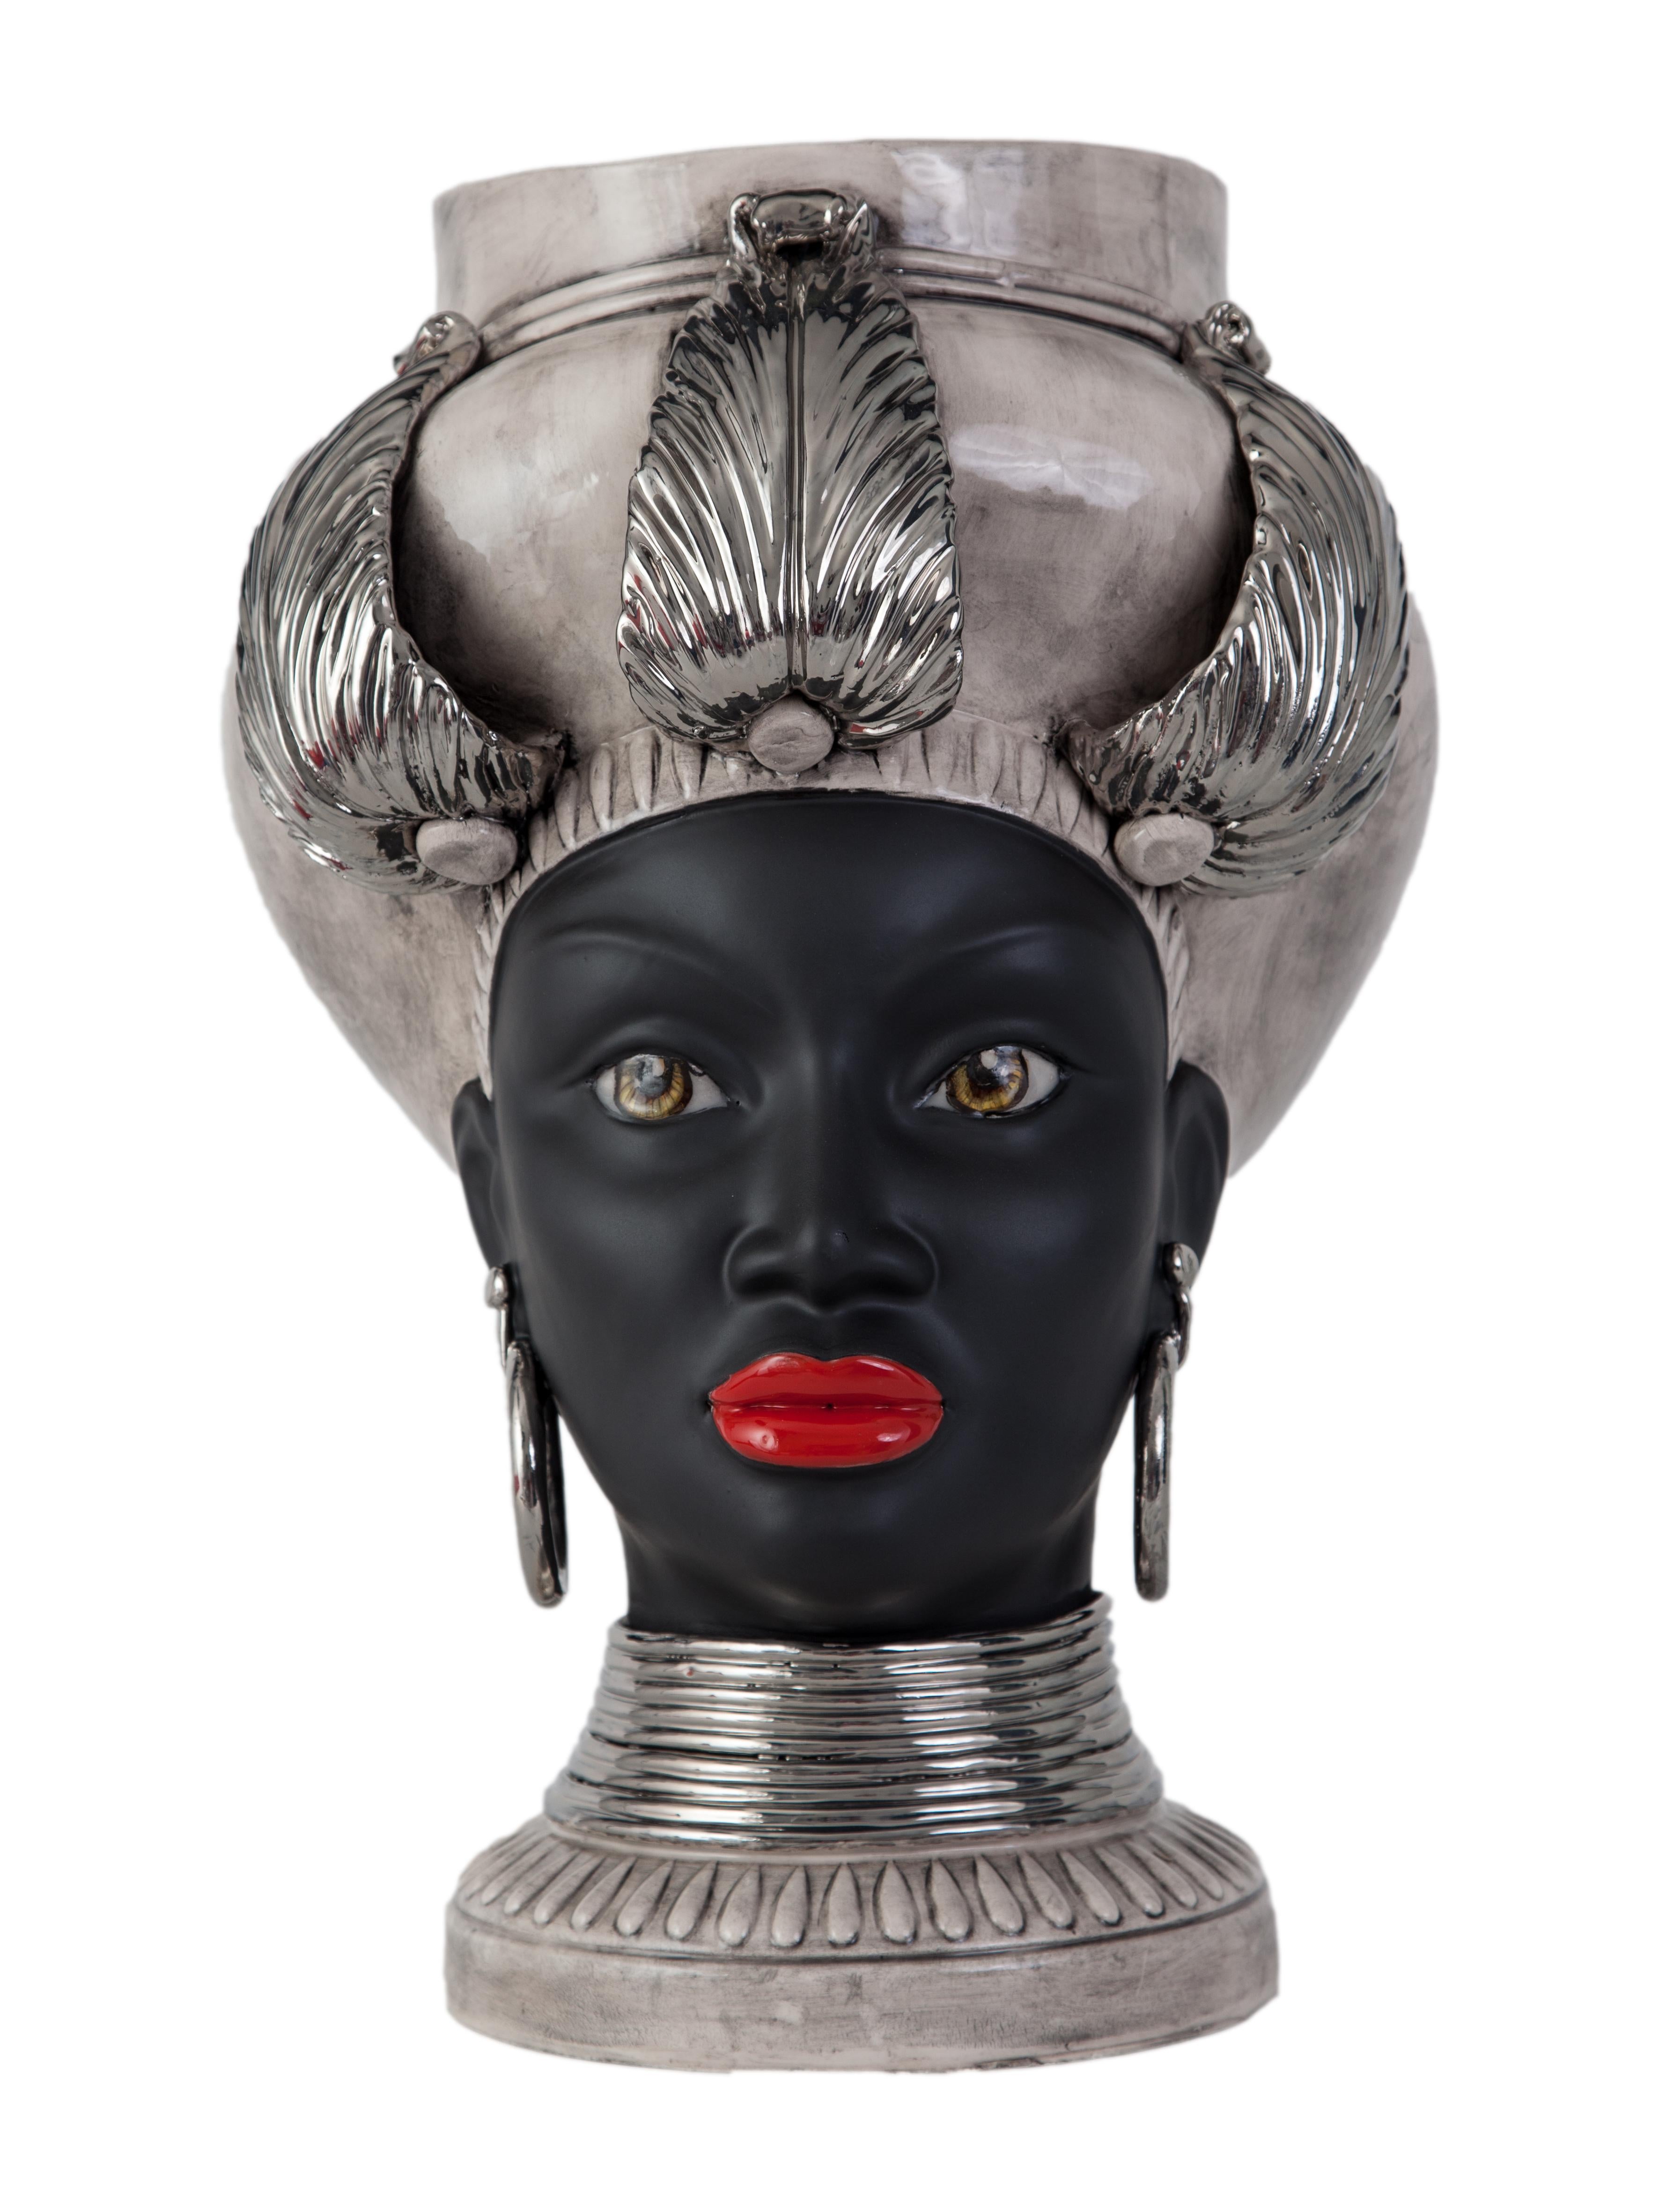 ISIDE I21, Man's Moorish Head, Handmade in Sicily, 2021, Golden, Size L For Sale 12